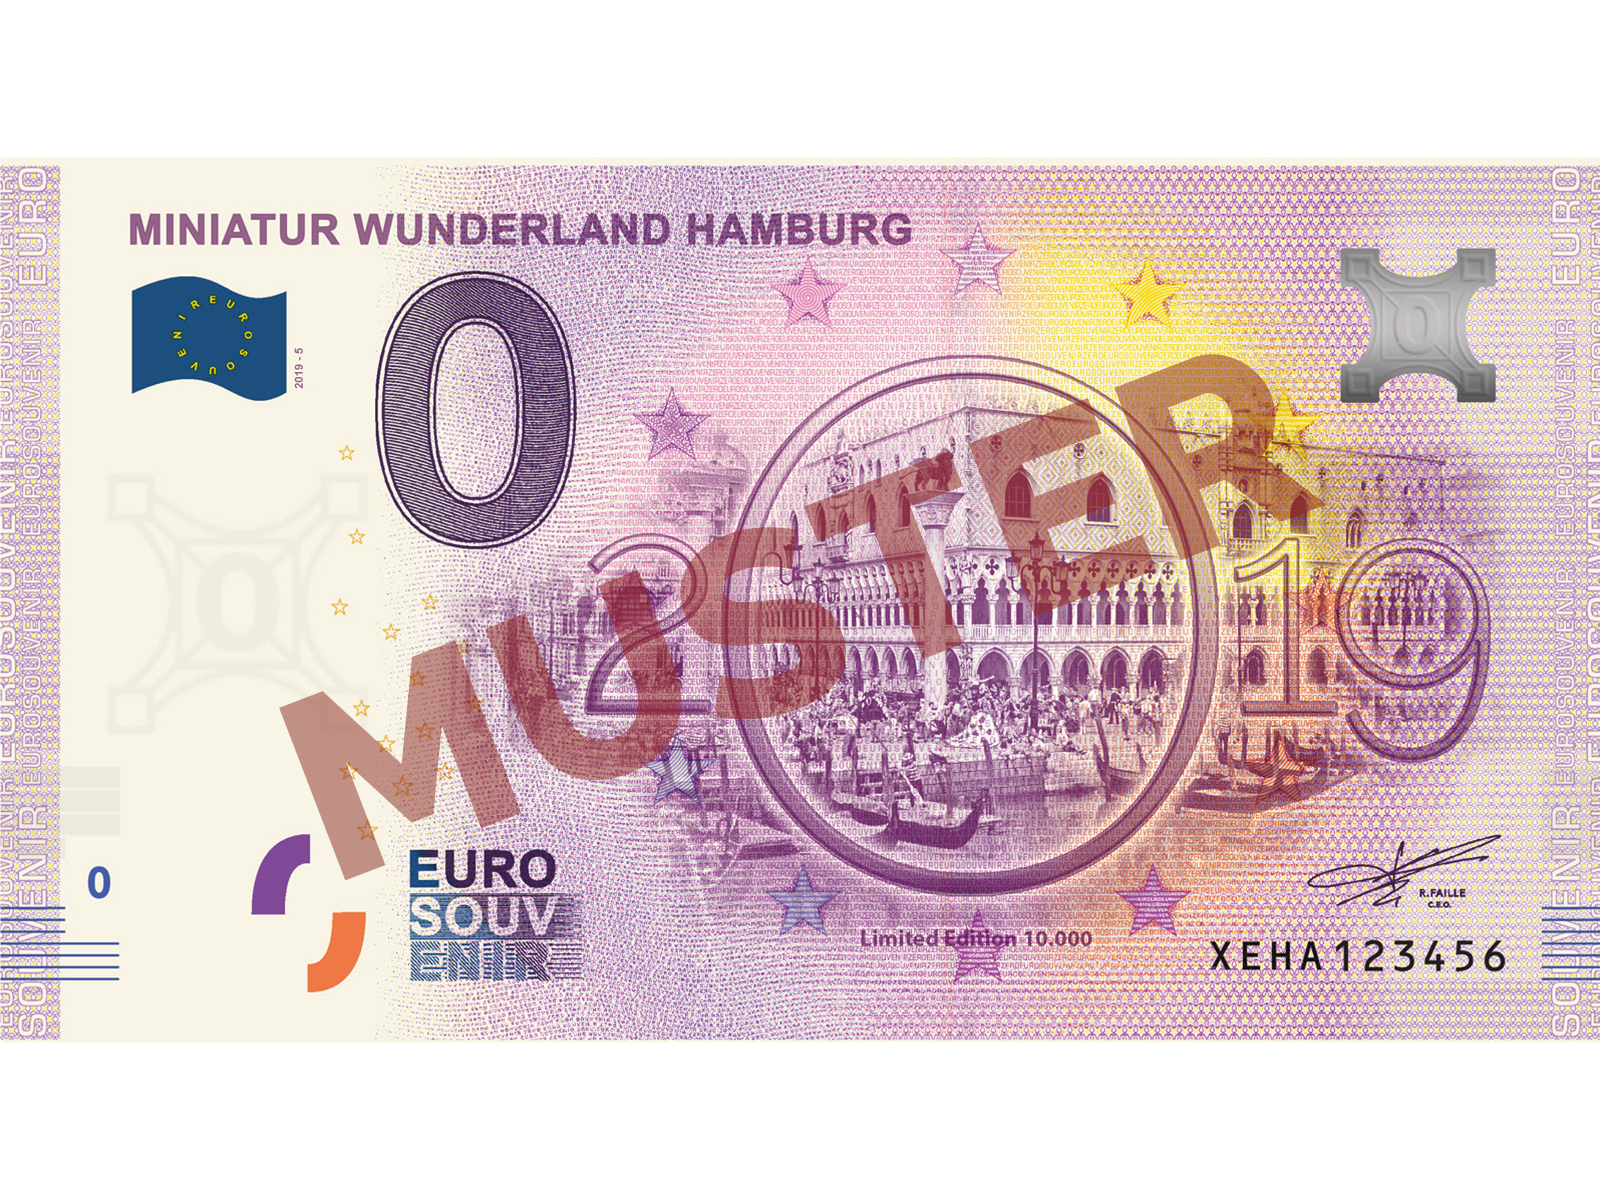 Eurosouvenir 0 Euro Schein Miniatur Wunderland Hamburg 2019  Venedig 2018-5